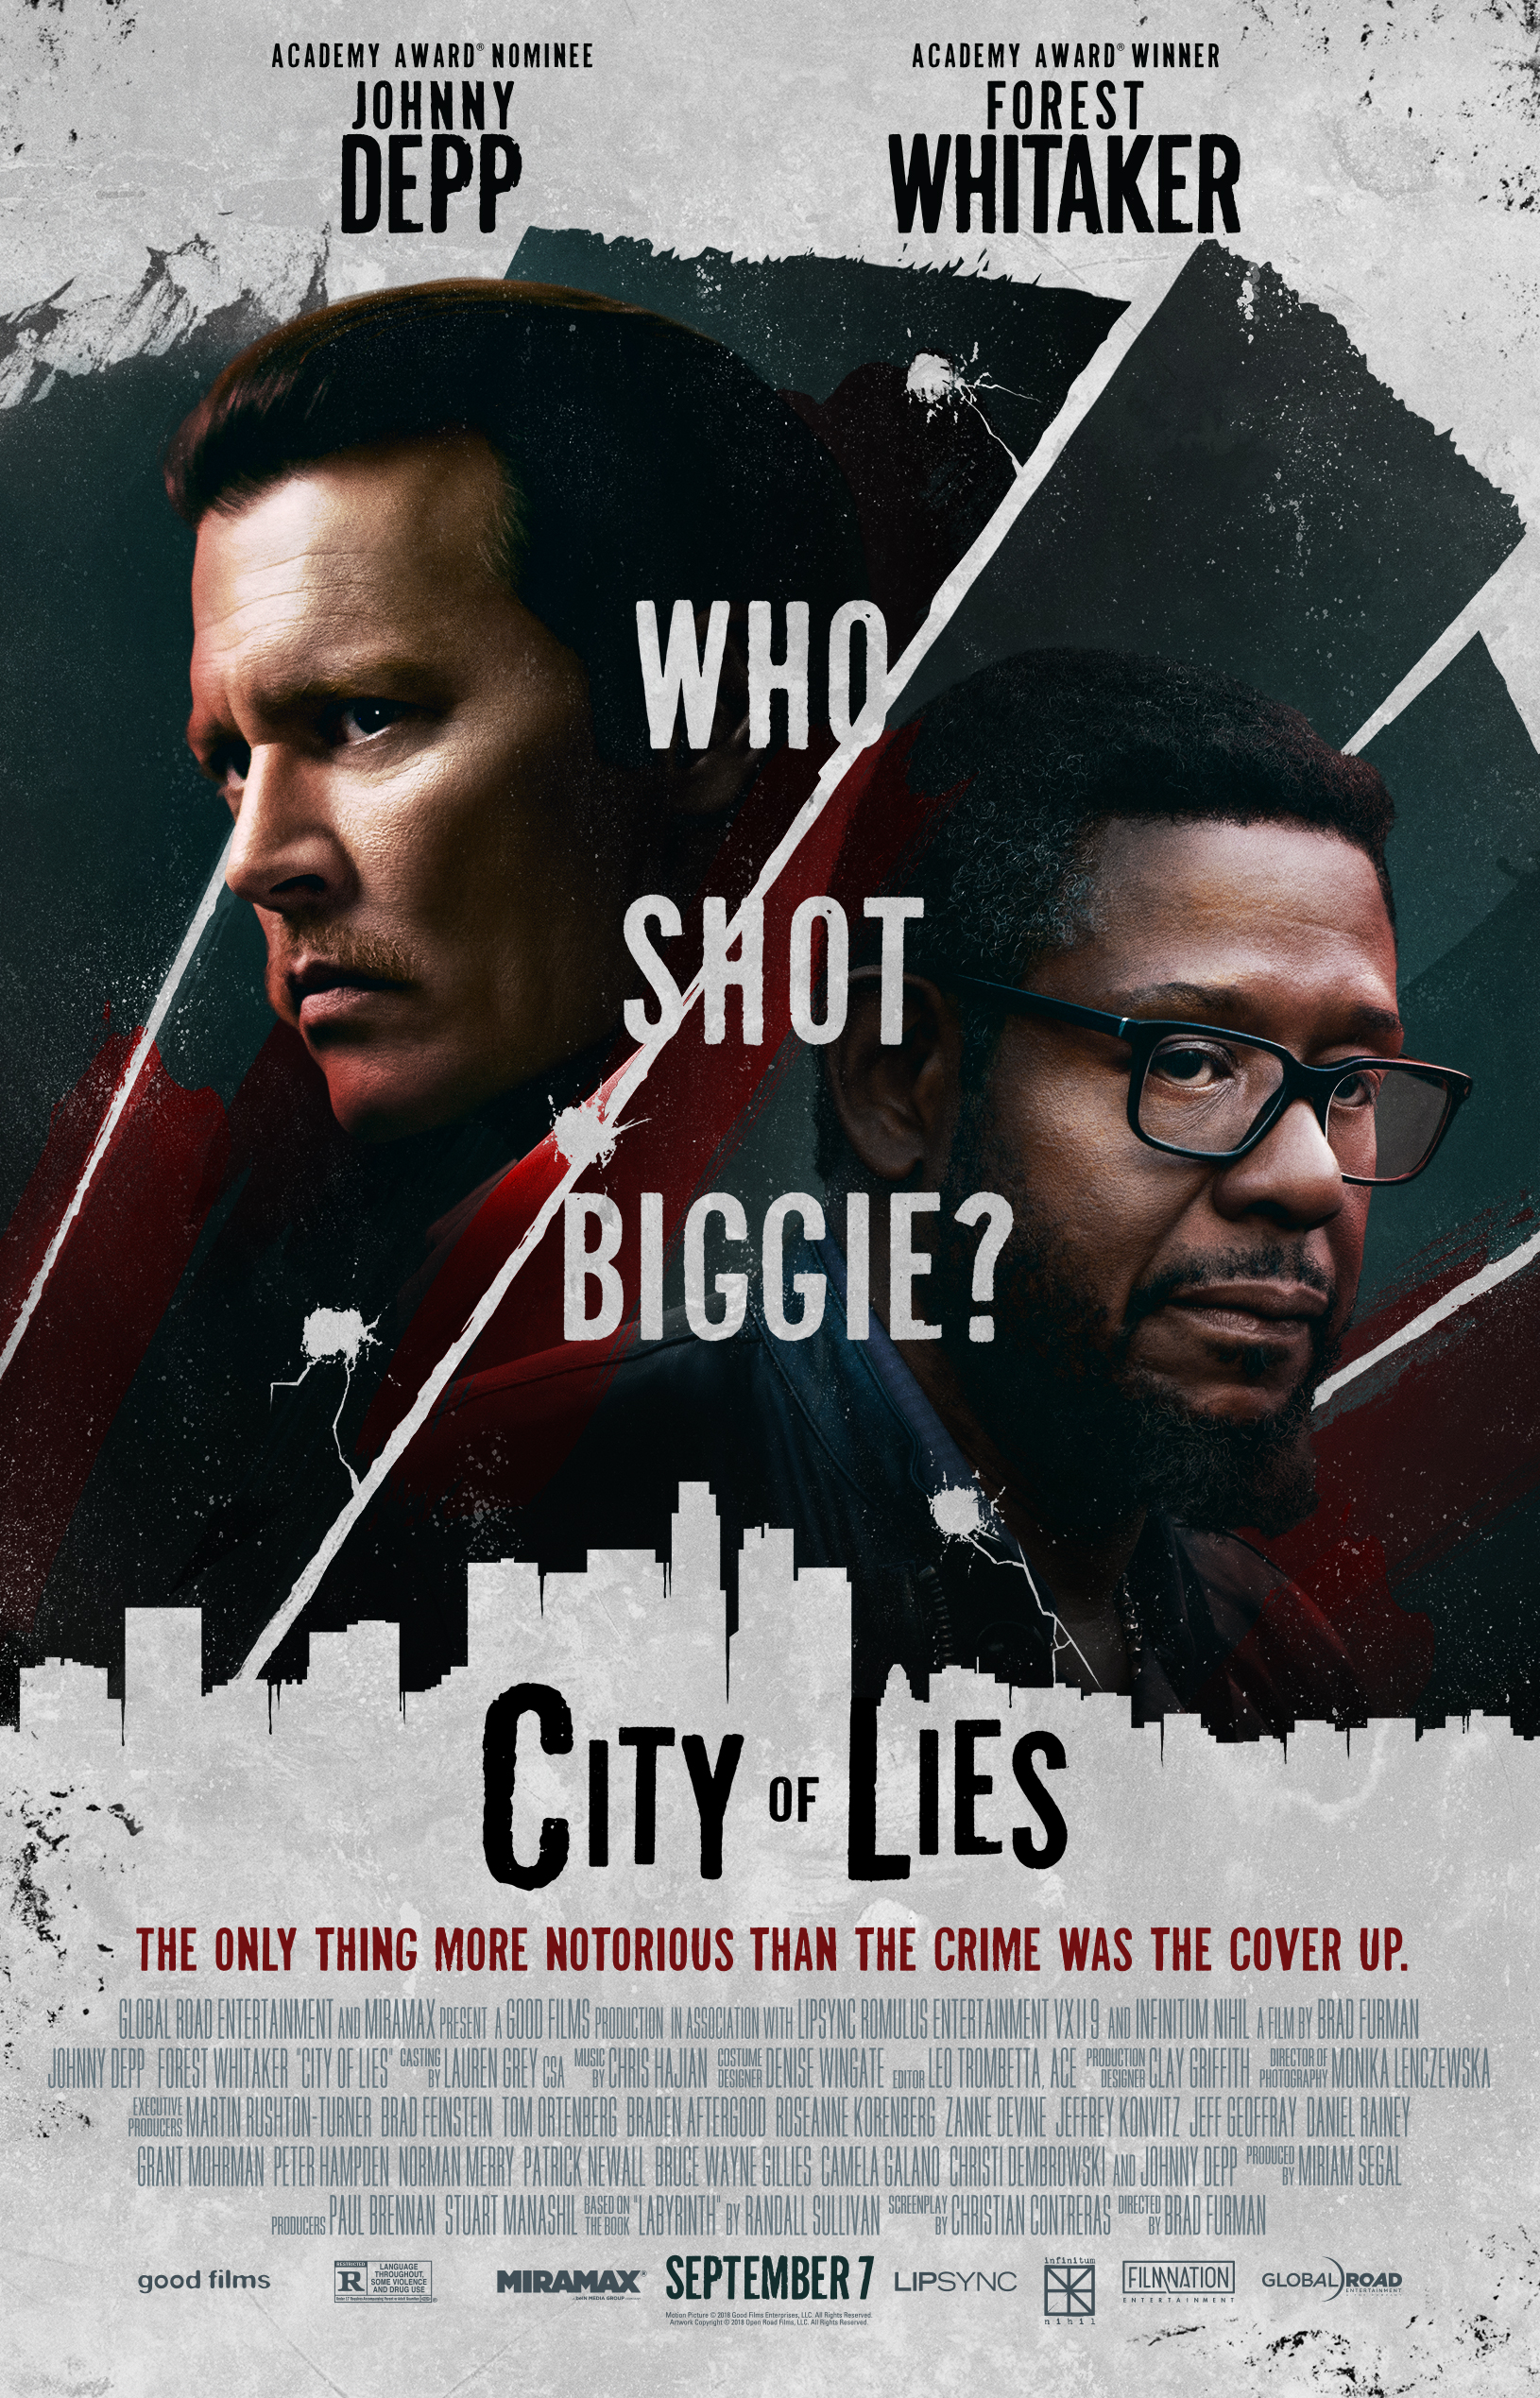 Nonton film City of Lies layarkaca21 indoxx1 ganool online streaming terbaru